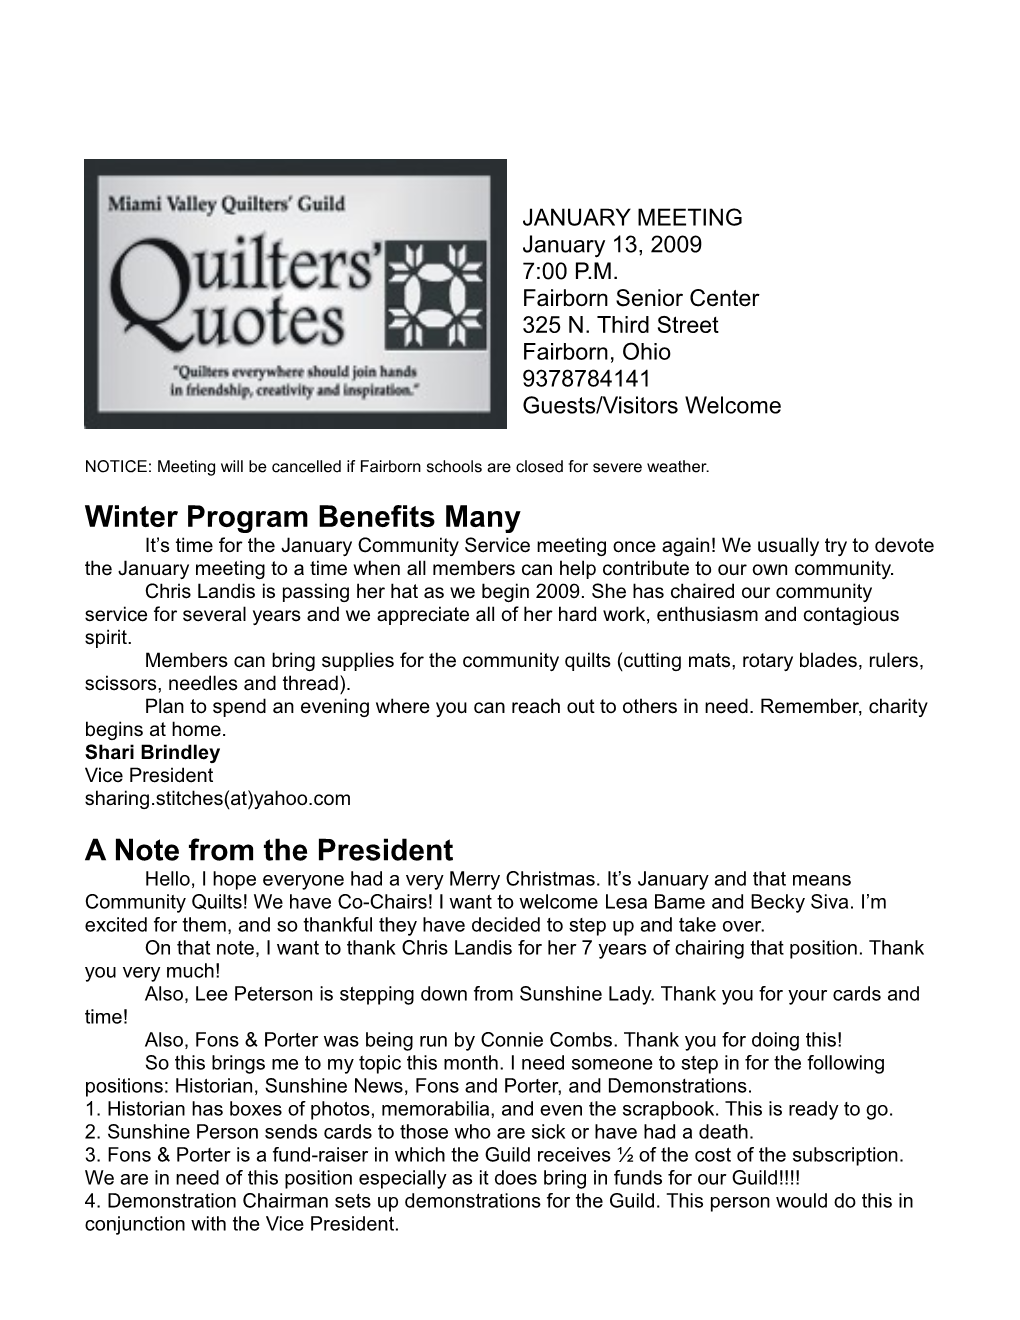 Winter Program Benefits Many